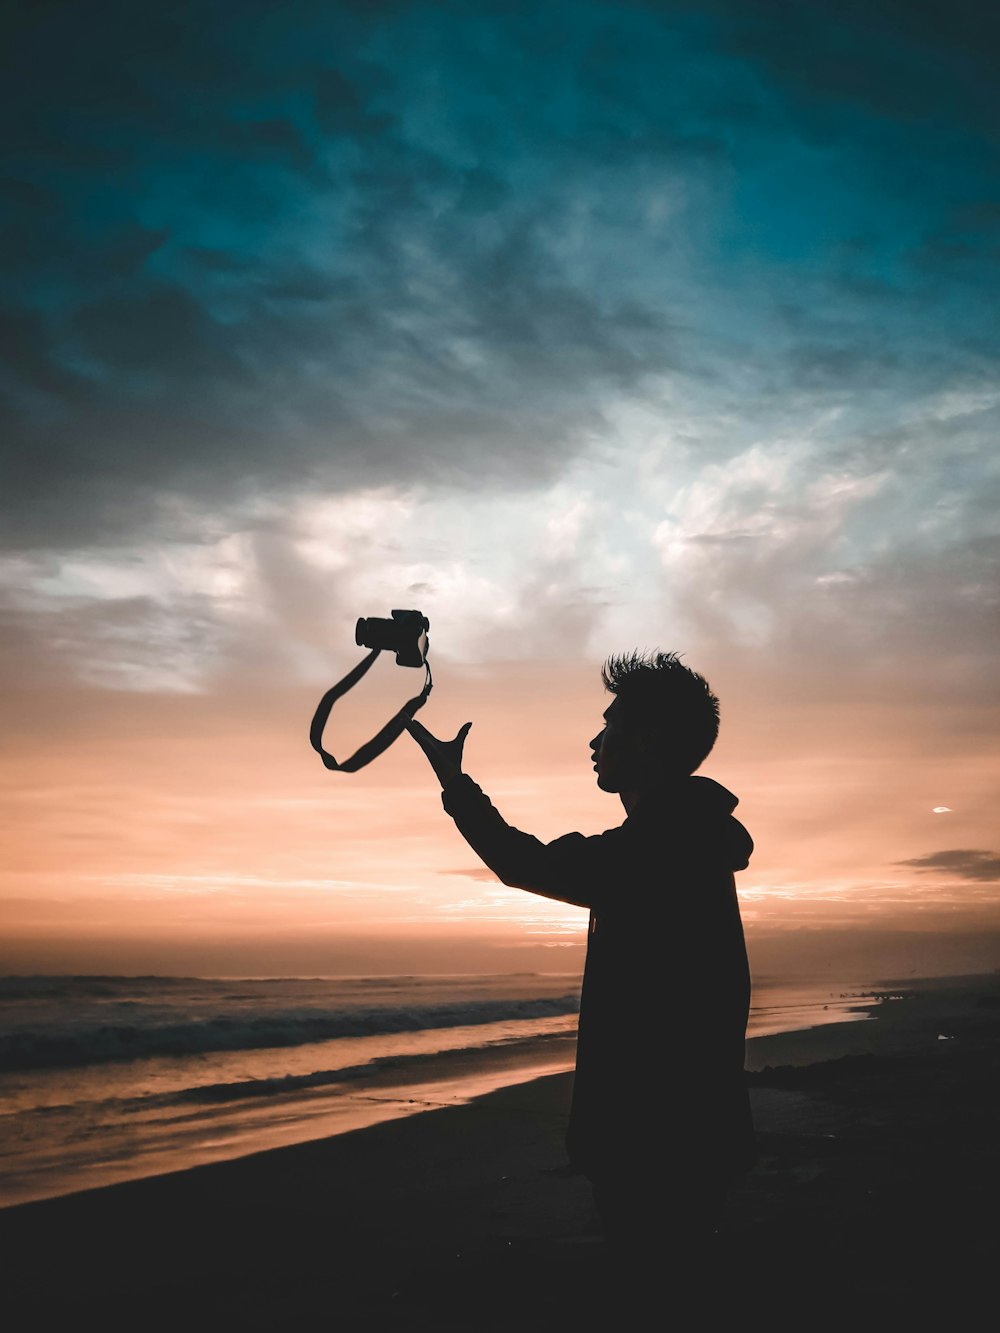 man throwing camera standing near shore during sunset